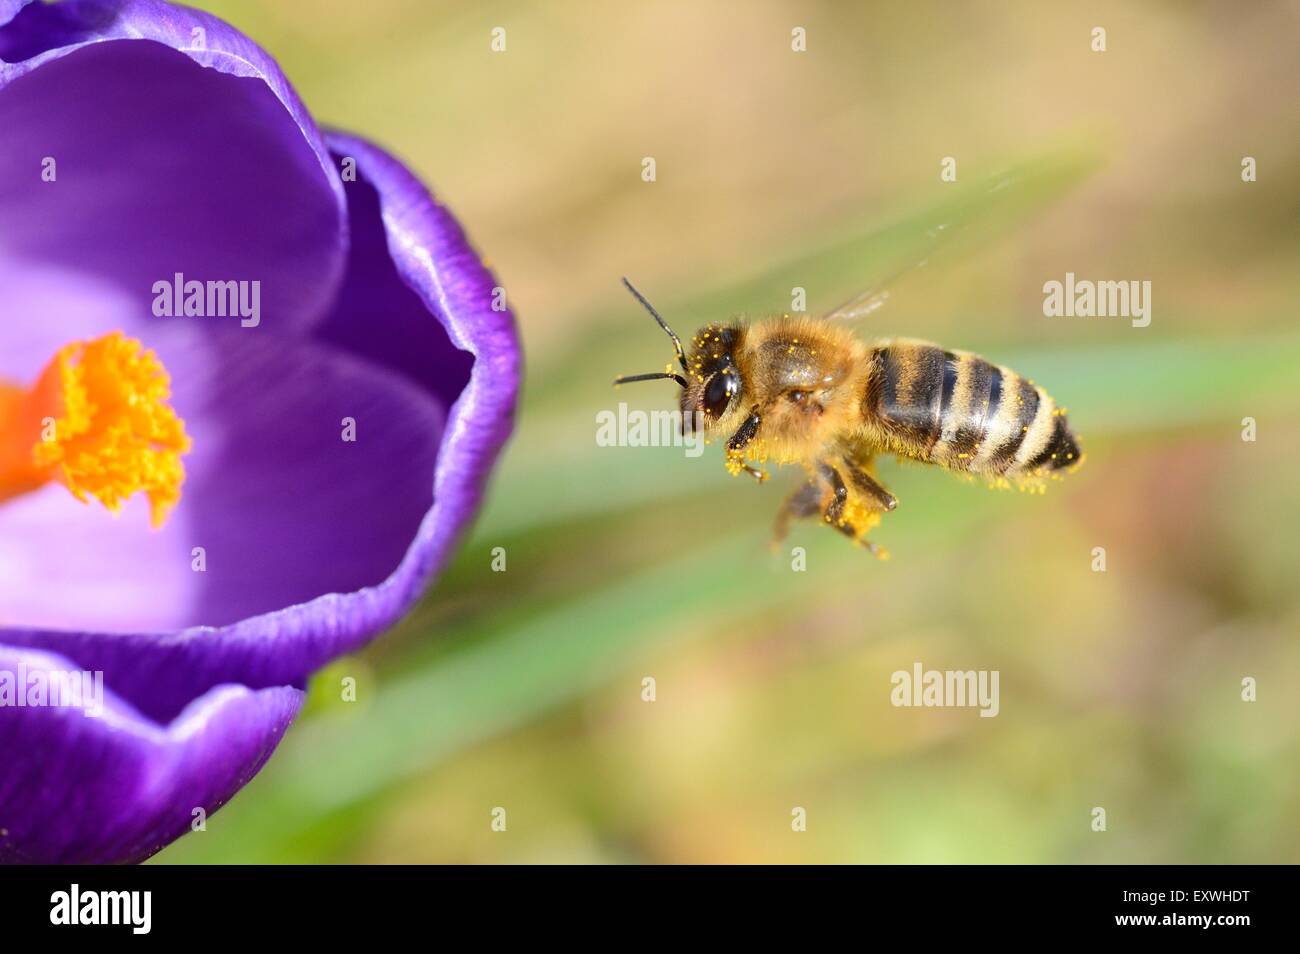 Close-up of a honey bee (Apis mellifera) on a domestic crocus (Crocus vernus) Stock Photo